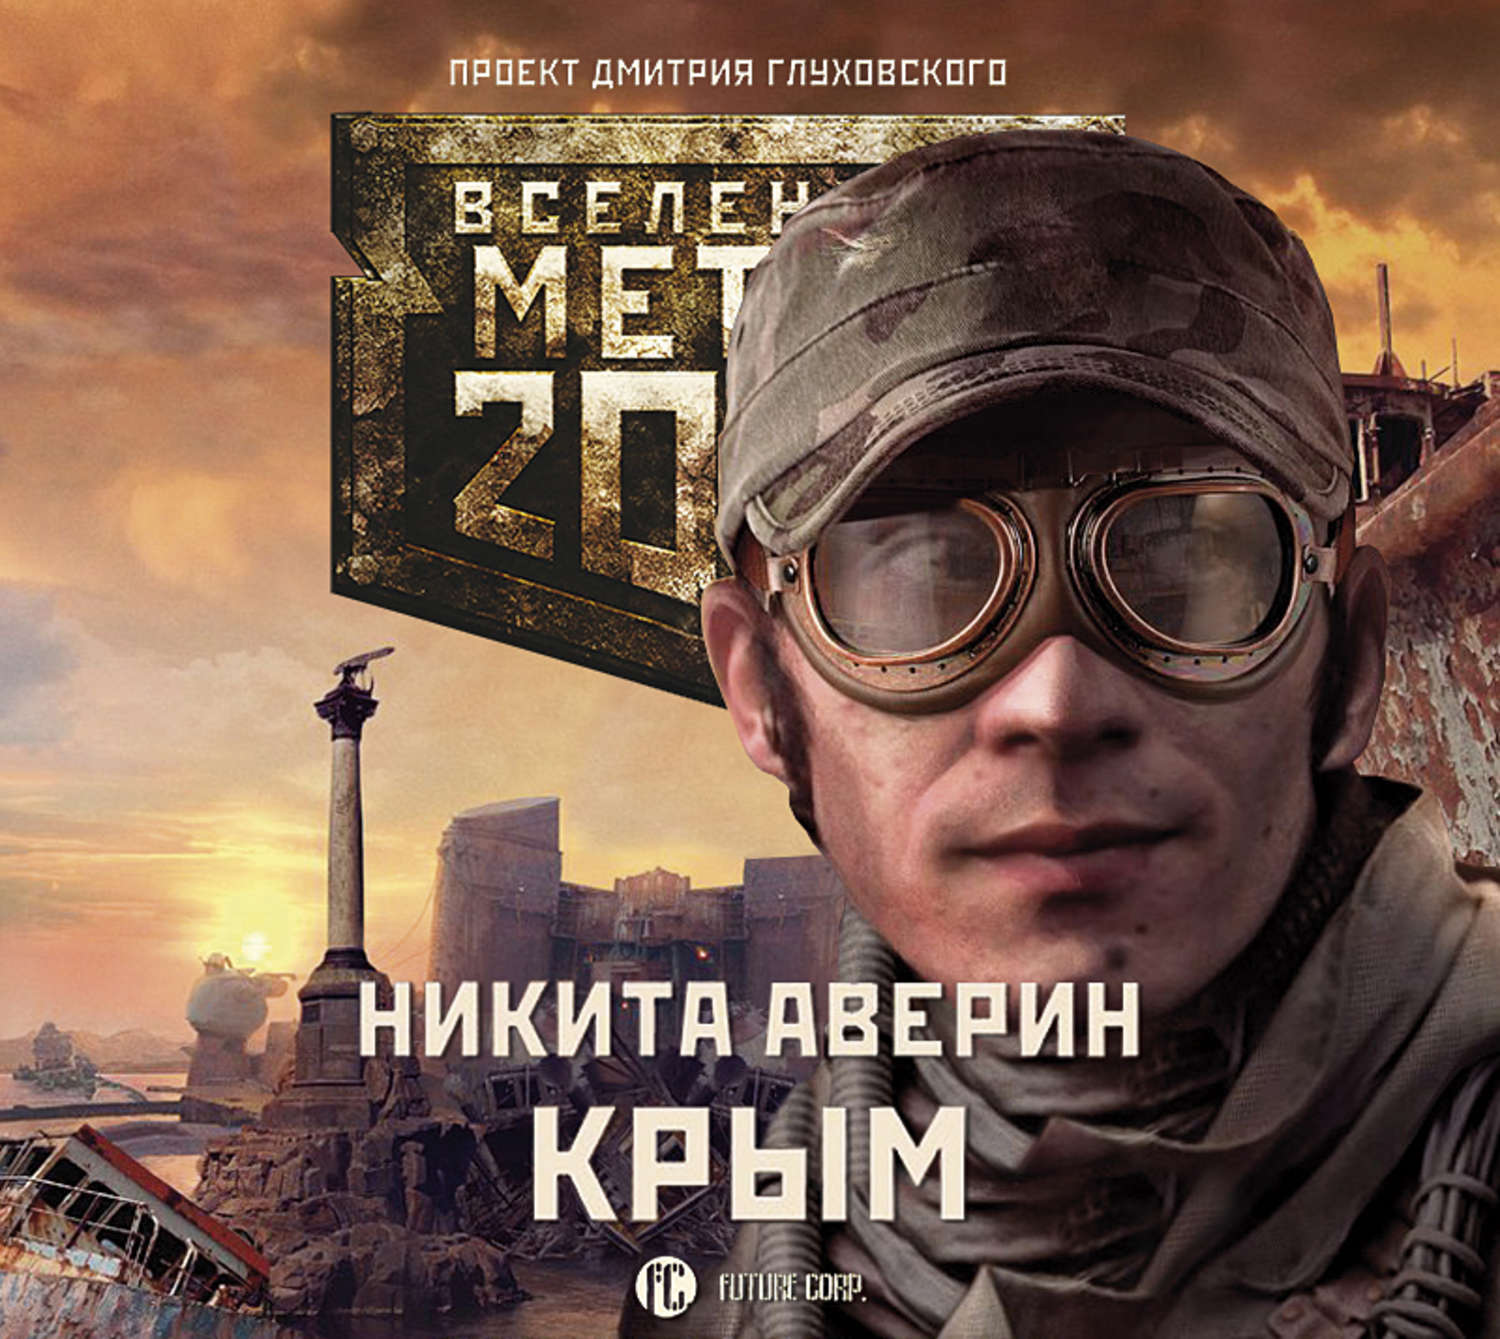 Книги метро 2033 аудиокнига. Книги метро 2033 Крым. Метро 2033 книга.